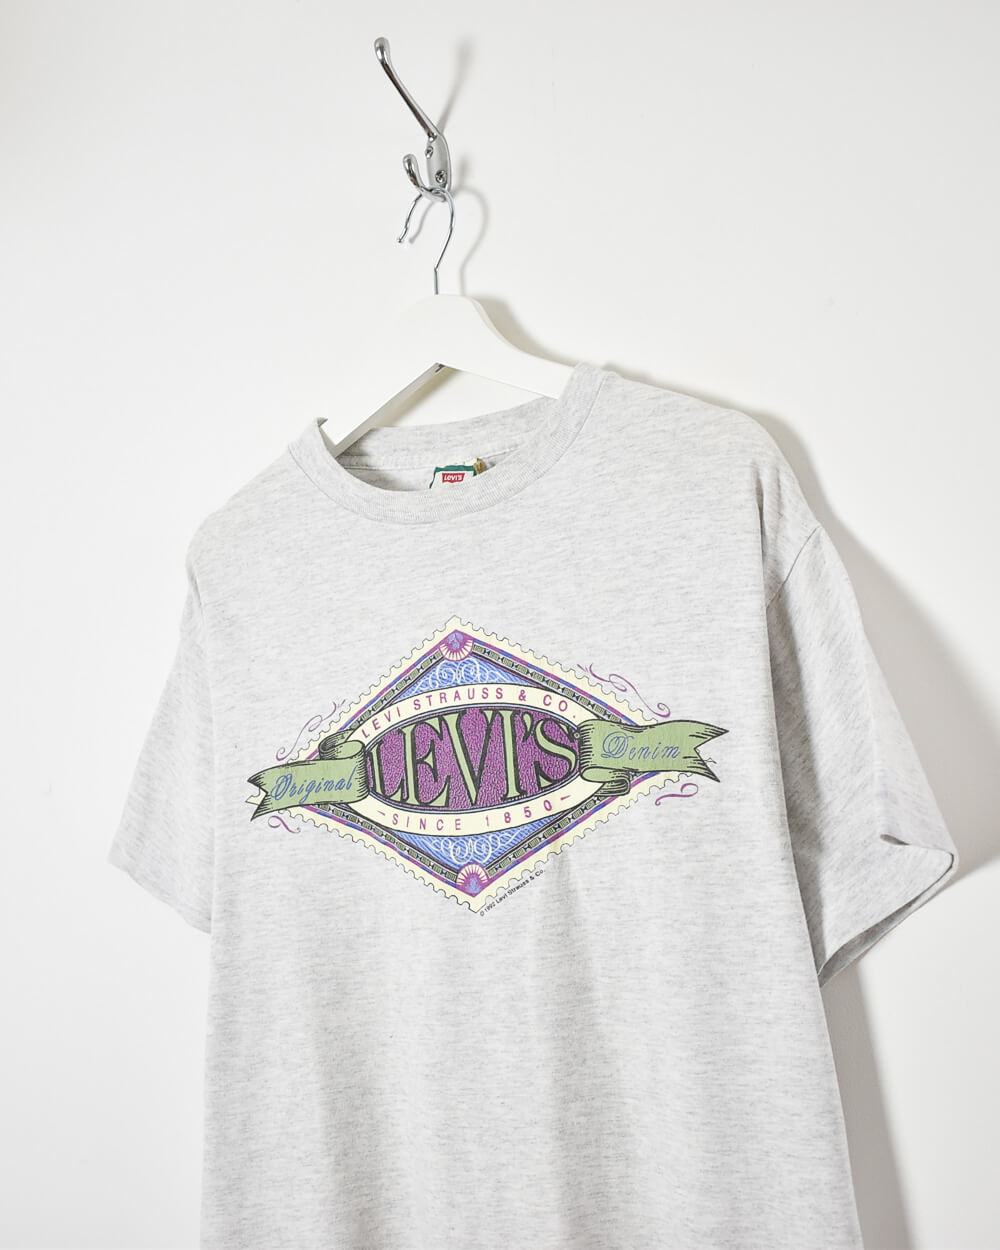 Stone Levi Strauss & Co. Since 1850 T-Shirt - Medium